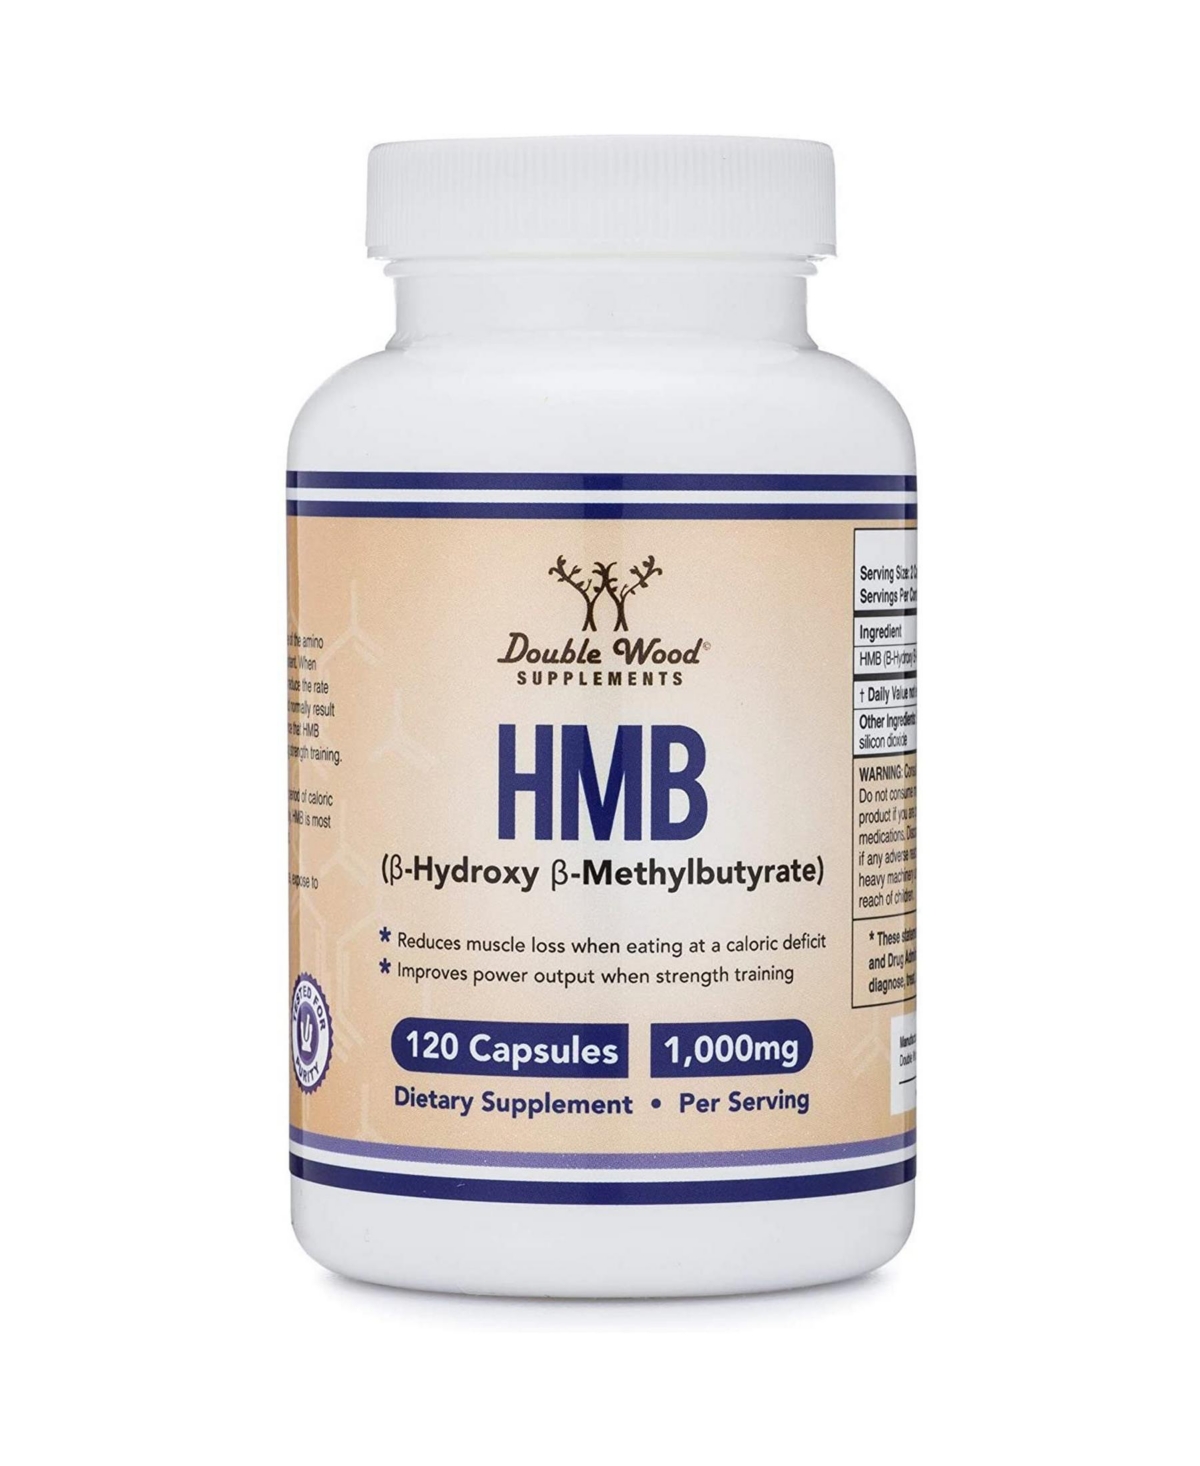 Hmb - 120 capsules, 1000 mg servings